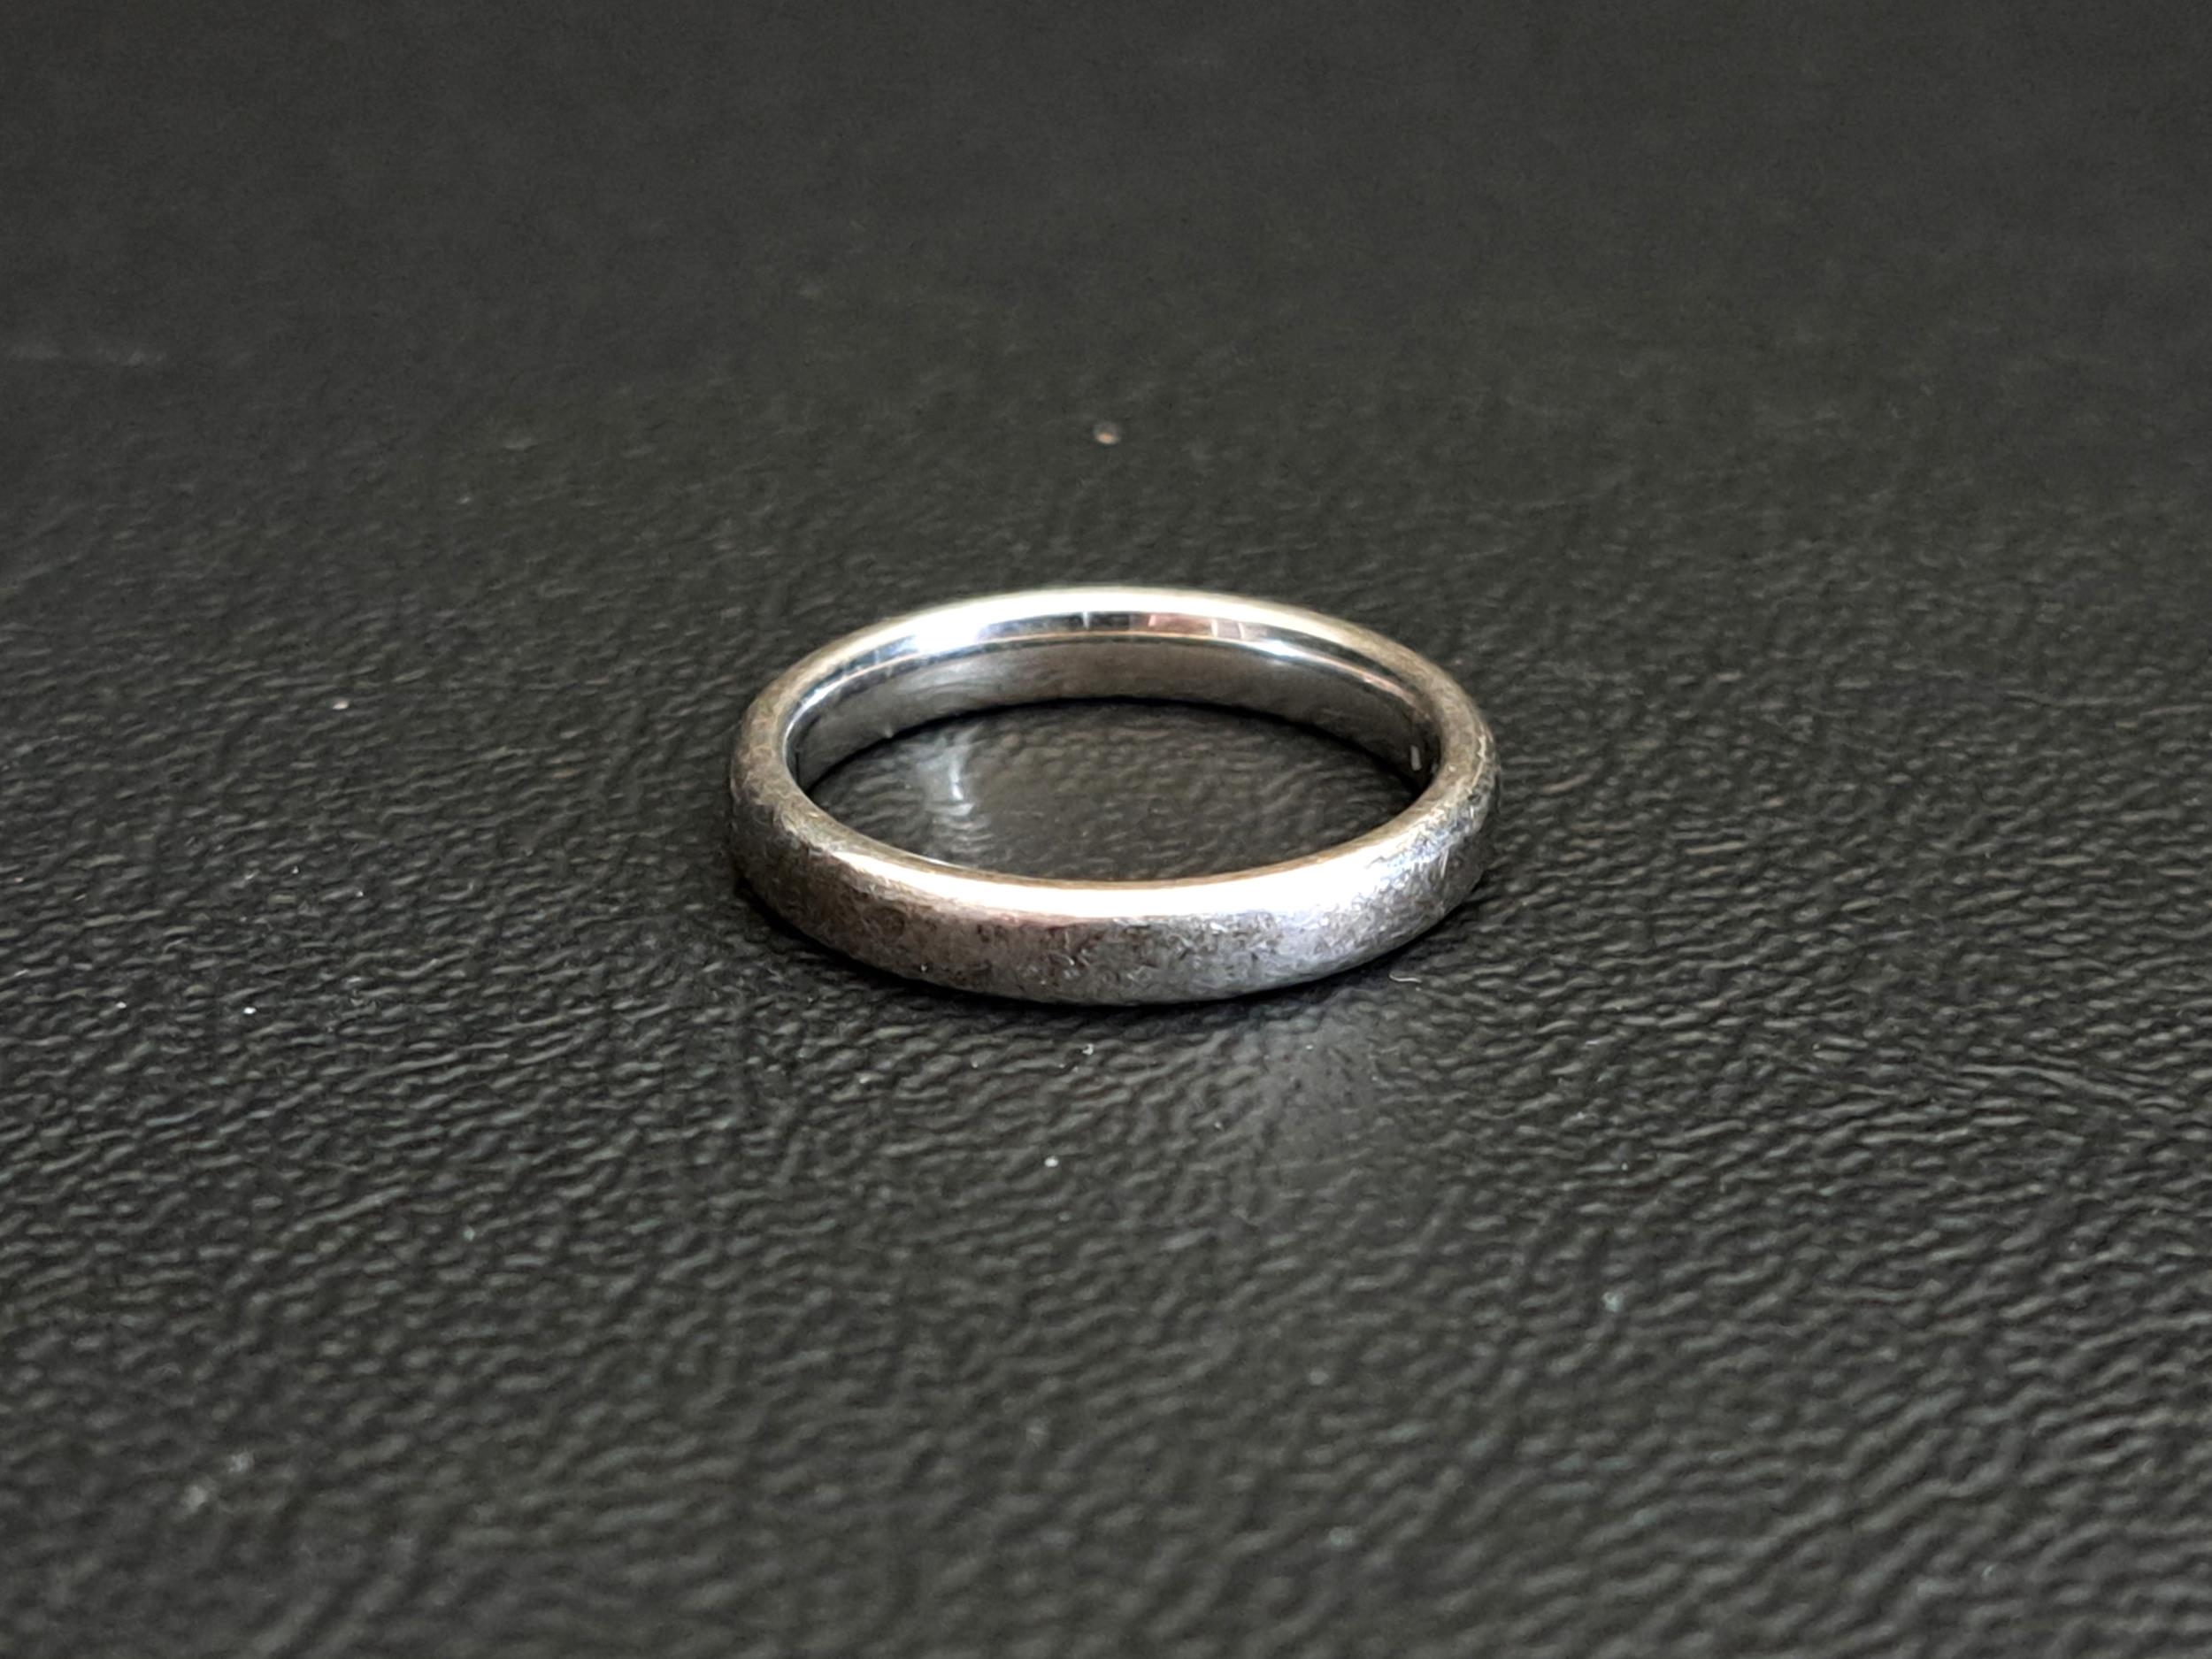 PLATINUM WEDDING BAND ring size I and approximately 4.9 grams